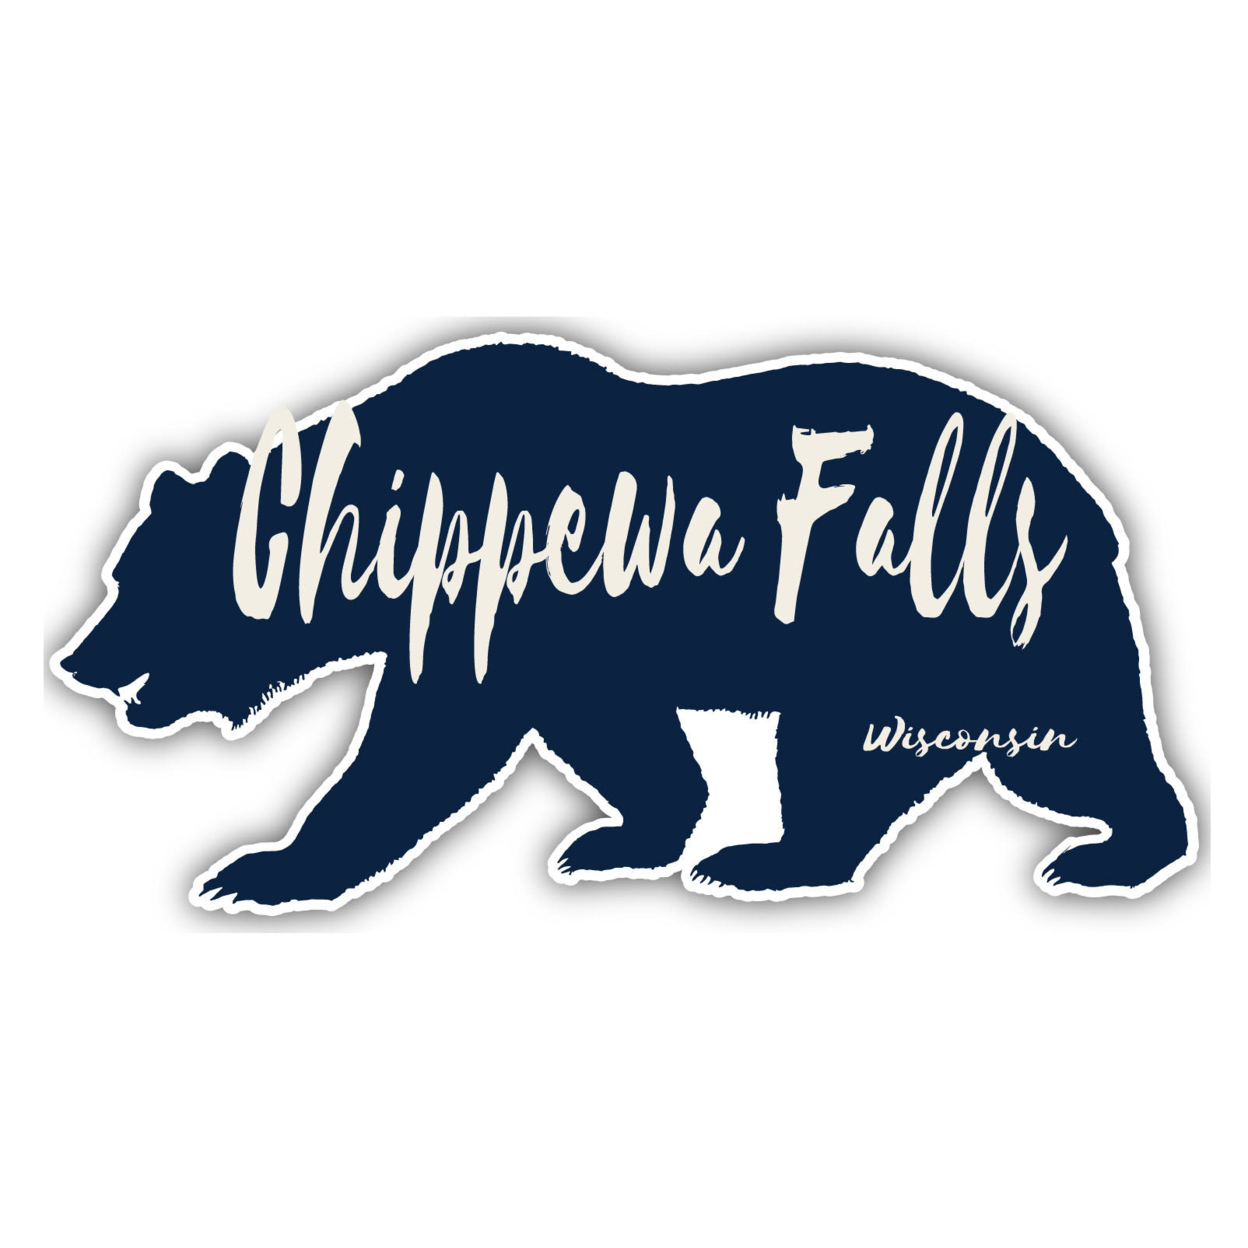 Chippewa Falls Wisconsin Souvenir Decorative Stickers (Choose Theme And Size) - Single Unit, 12-Inch, Bear